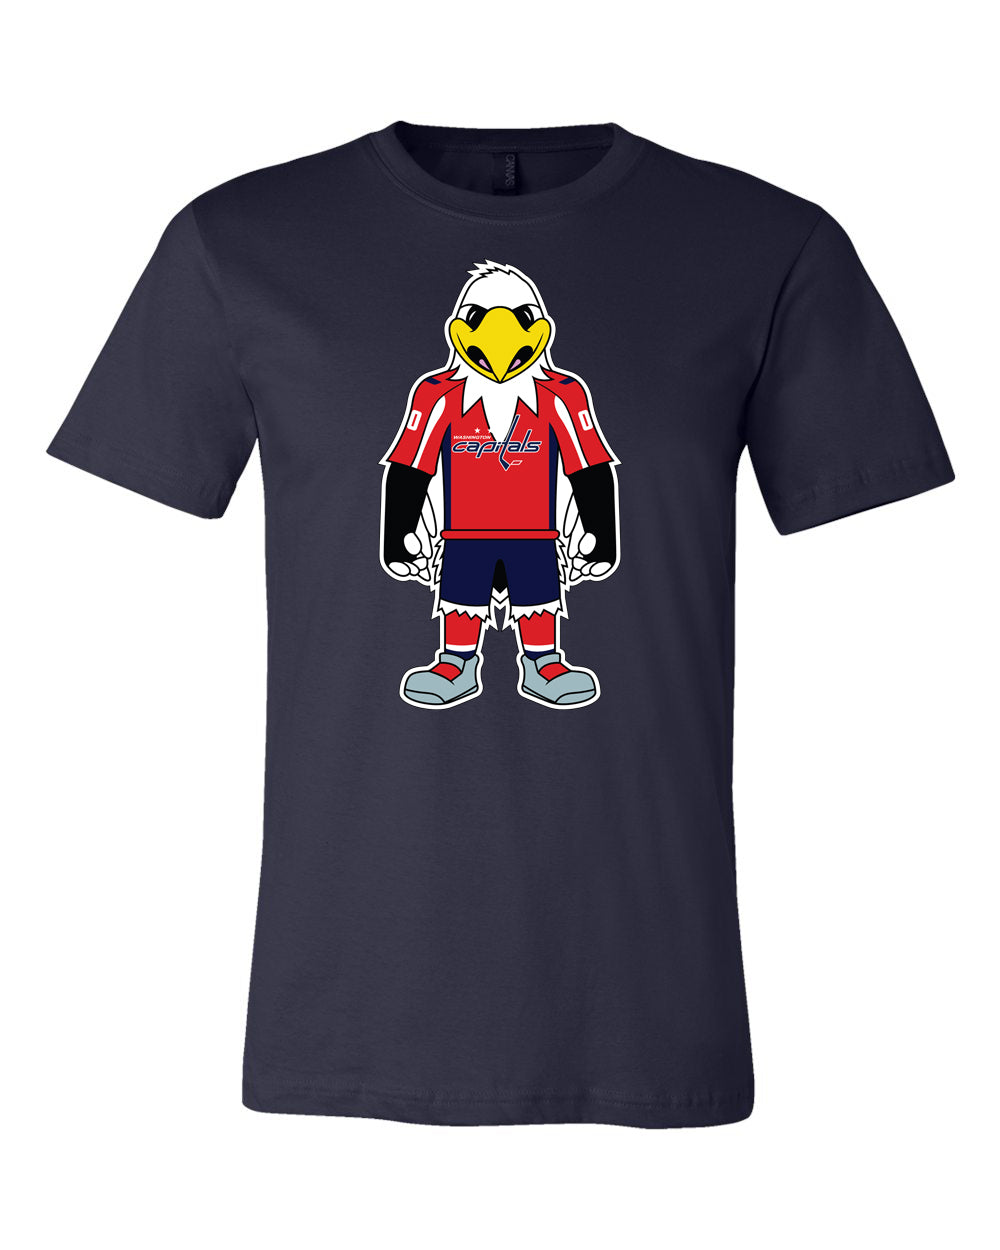 Washington Capitals Mascot Shirt, Slapshot Mascot Shirt 🏒🏆